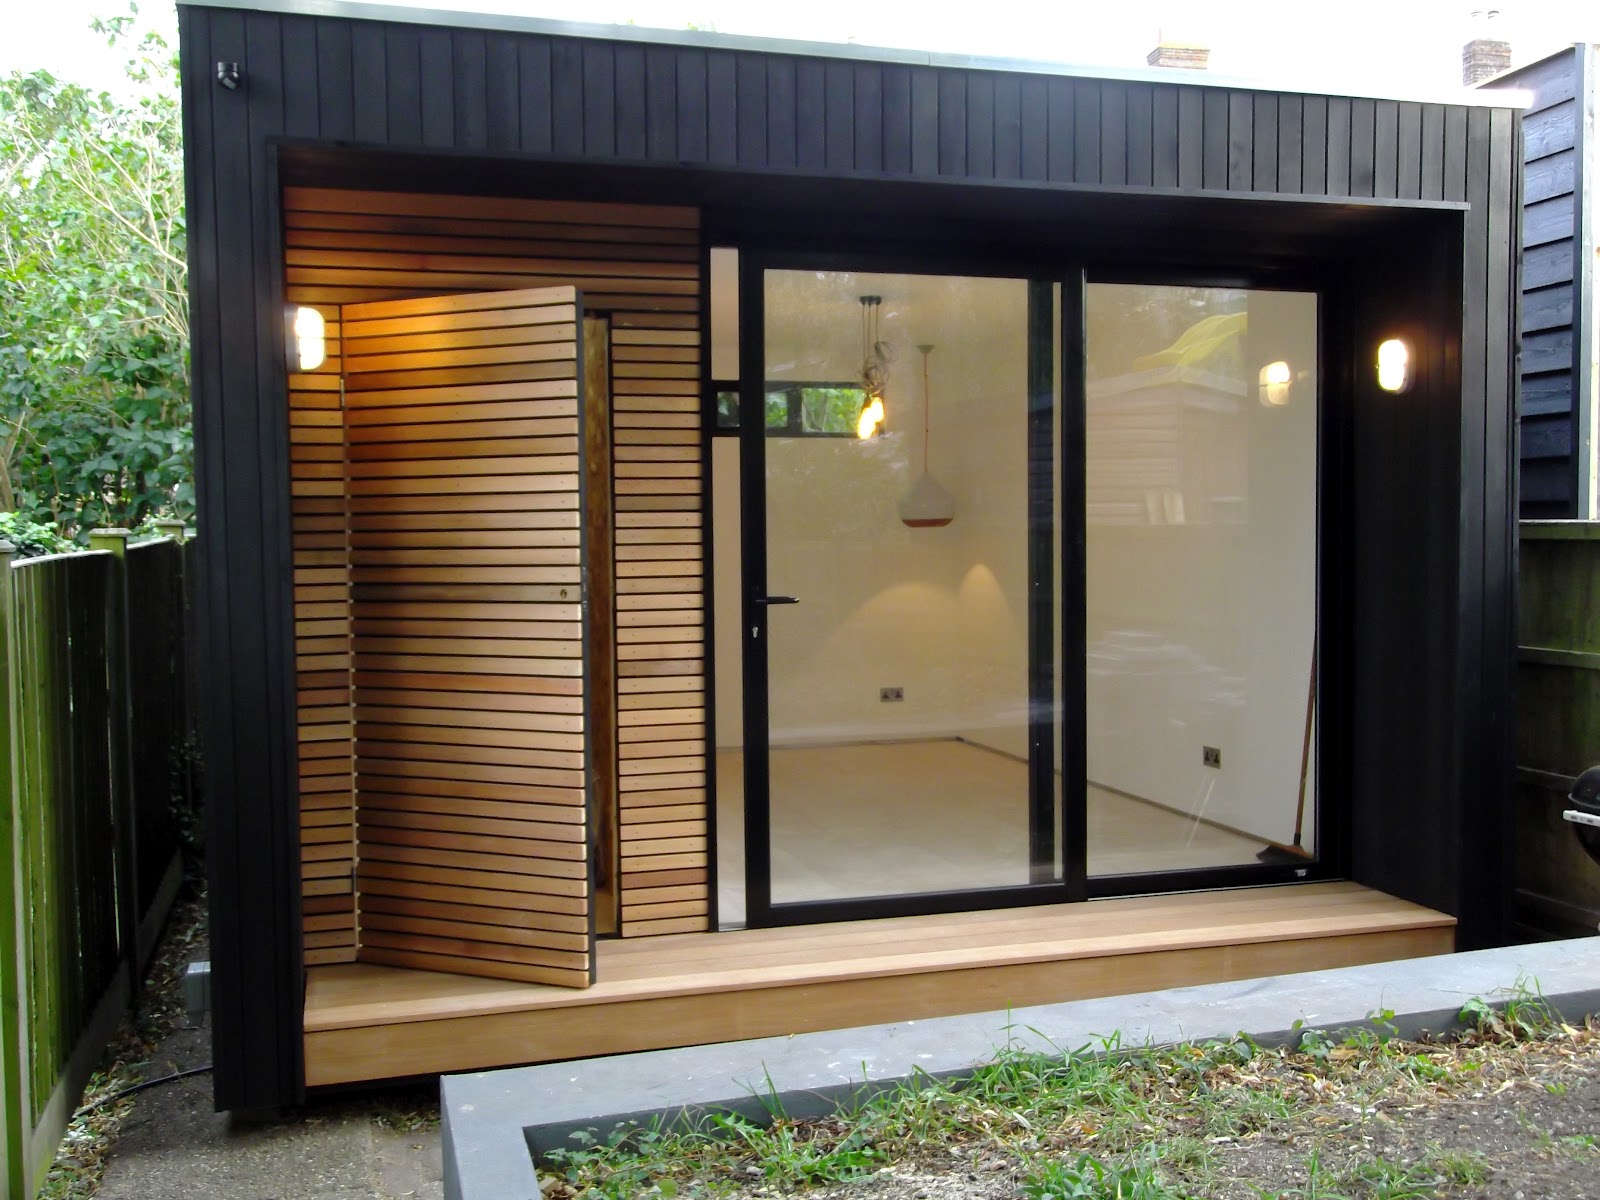  Garden Office with sliding doors in black aluminium and bike storage